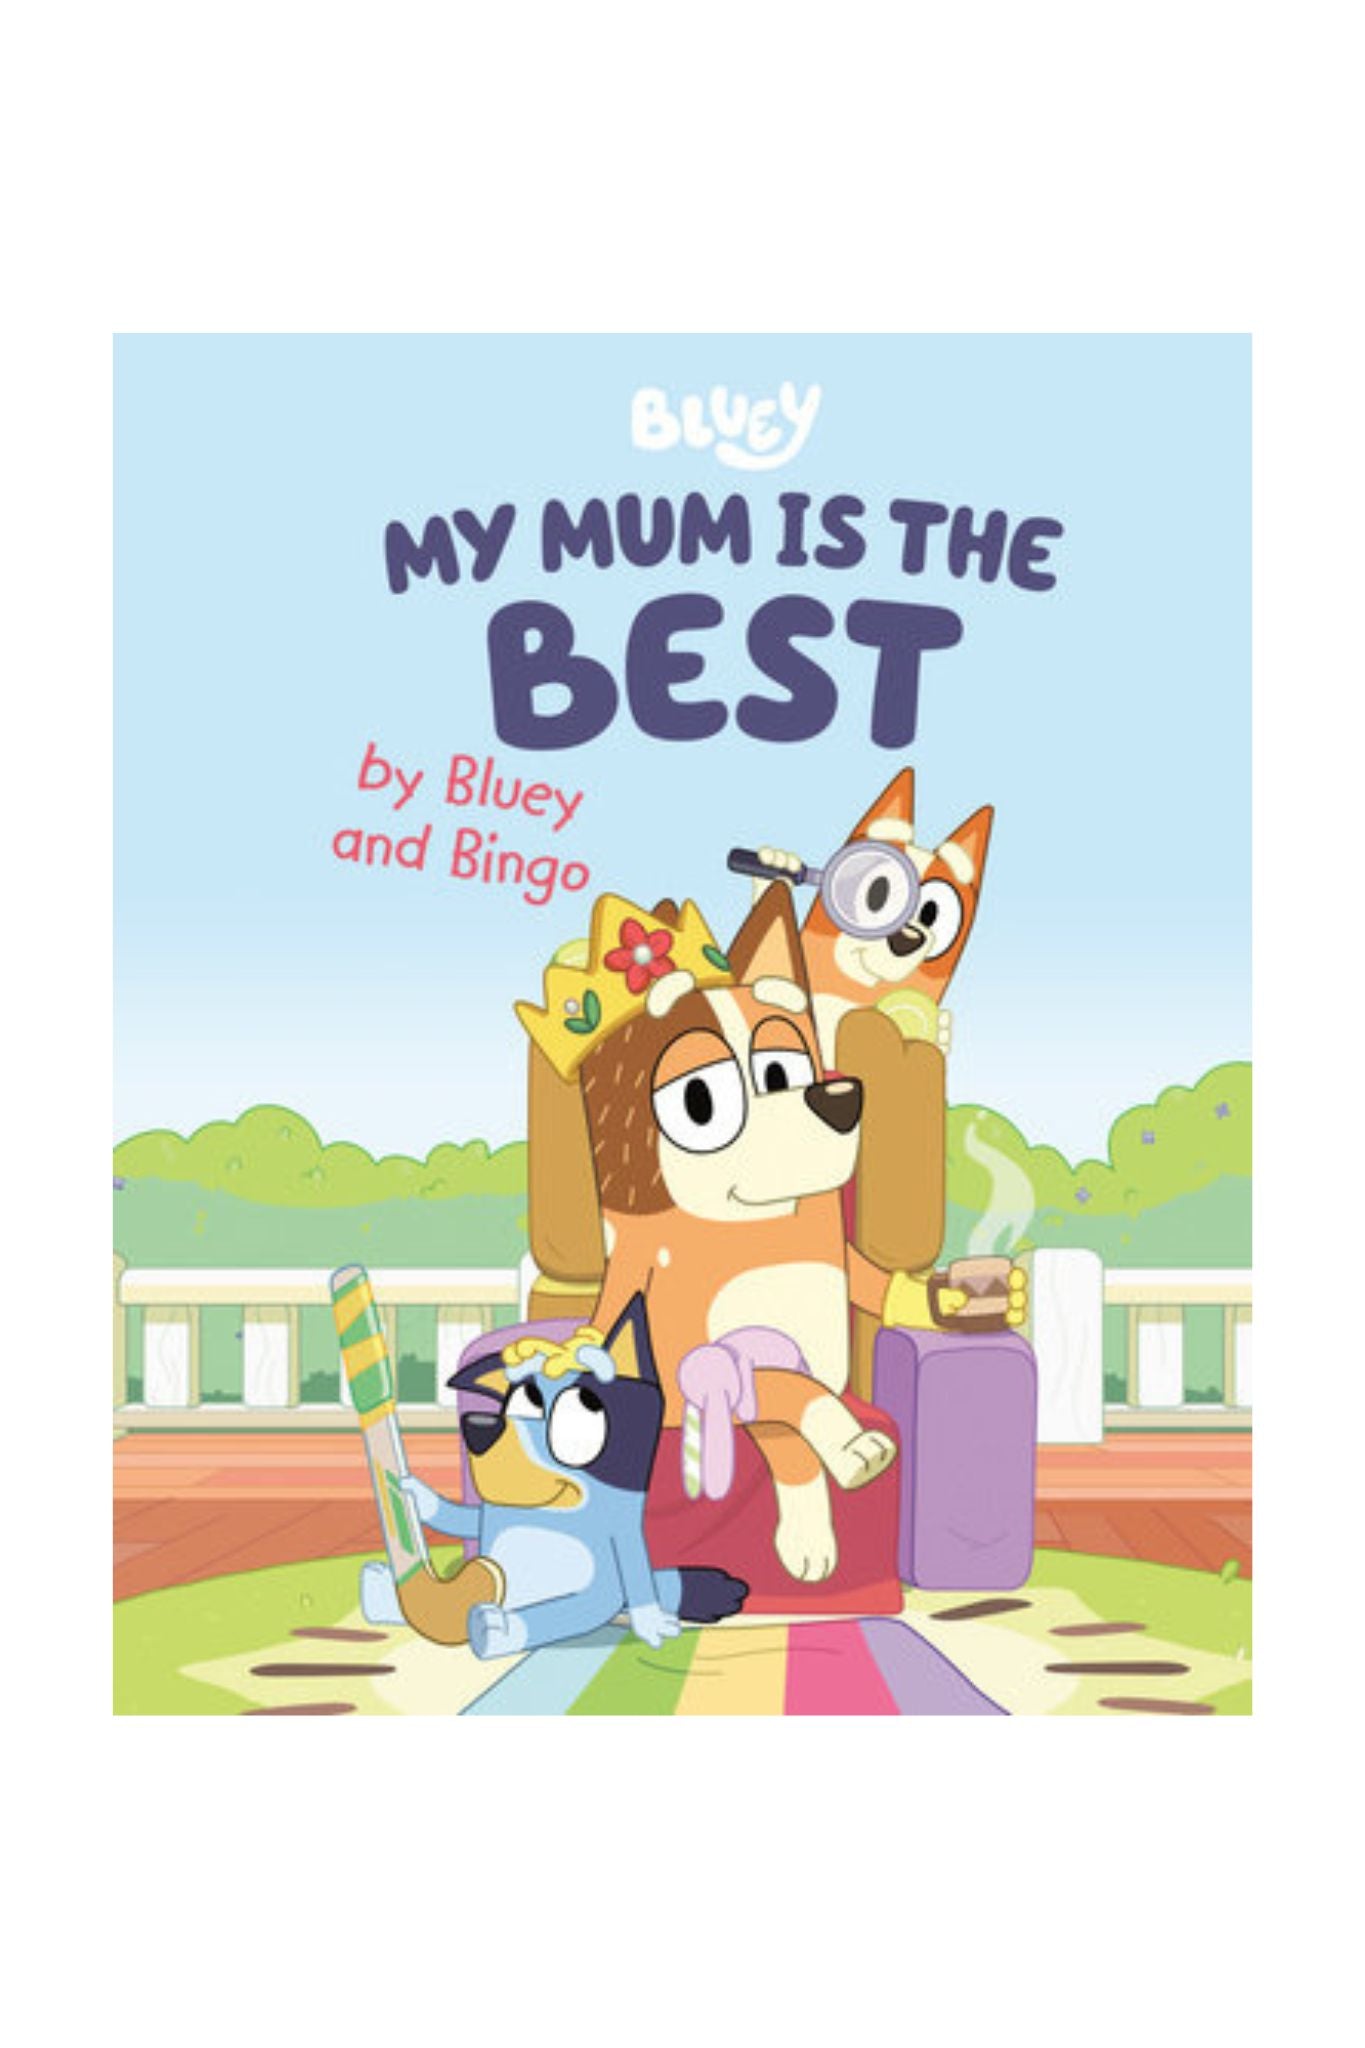 Bluey: My Mum Is the Best by Bluey and Bingo